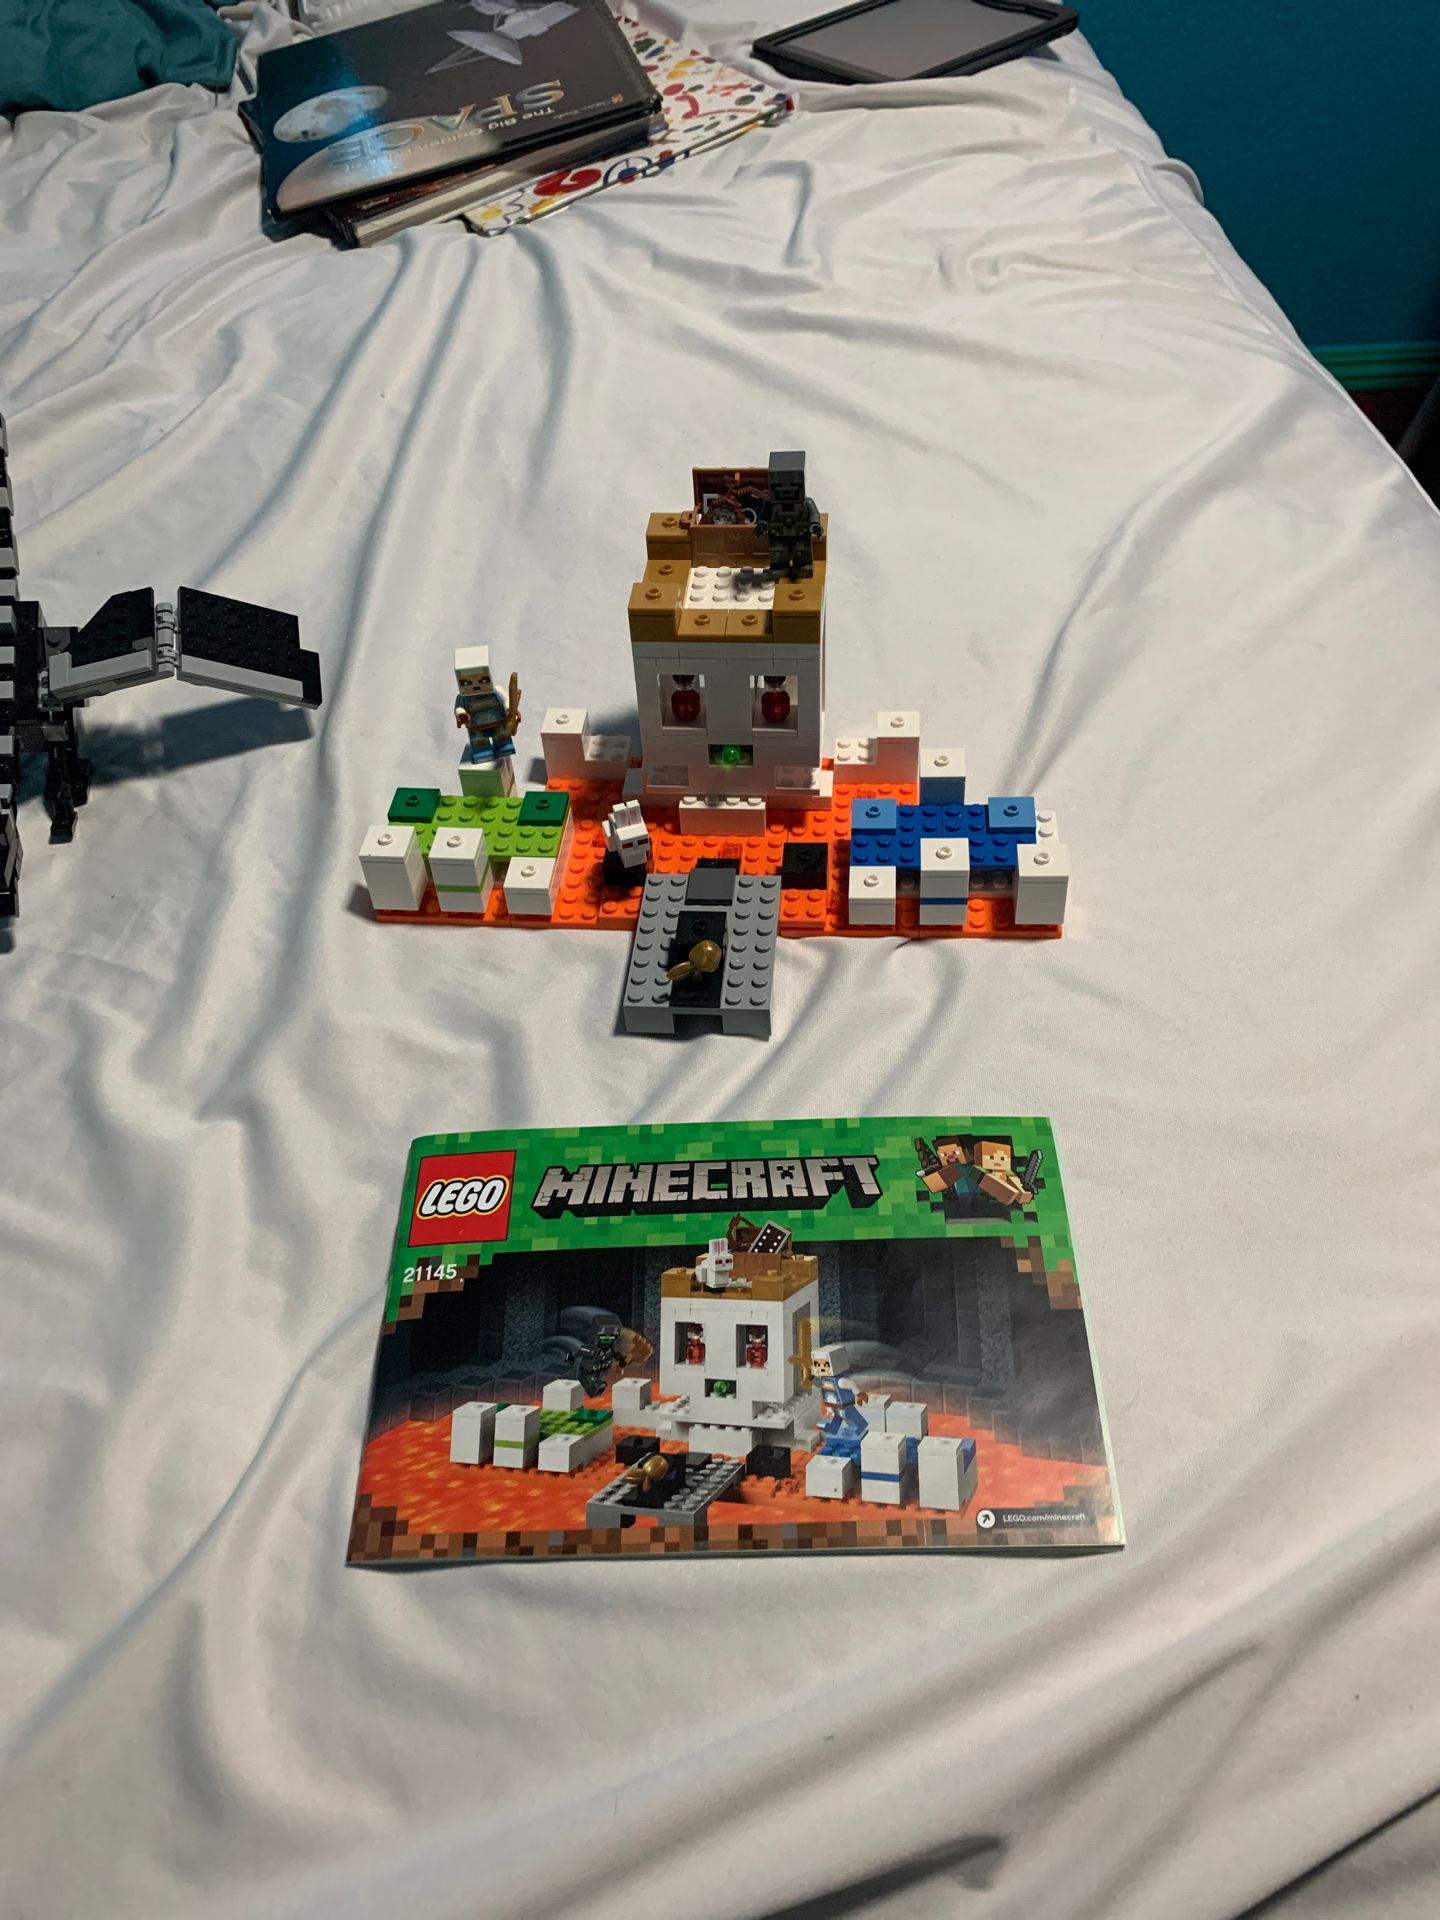 2 LEGO Minecraft sets